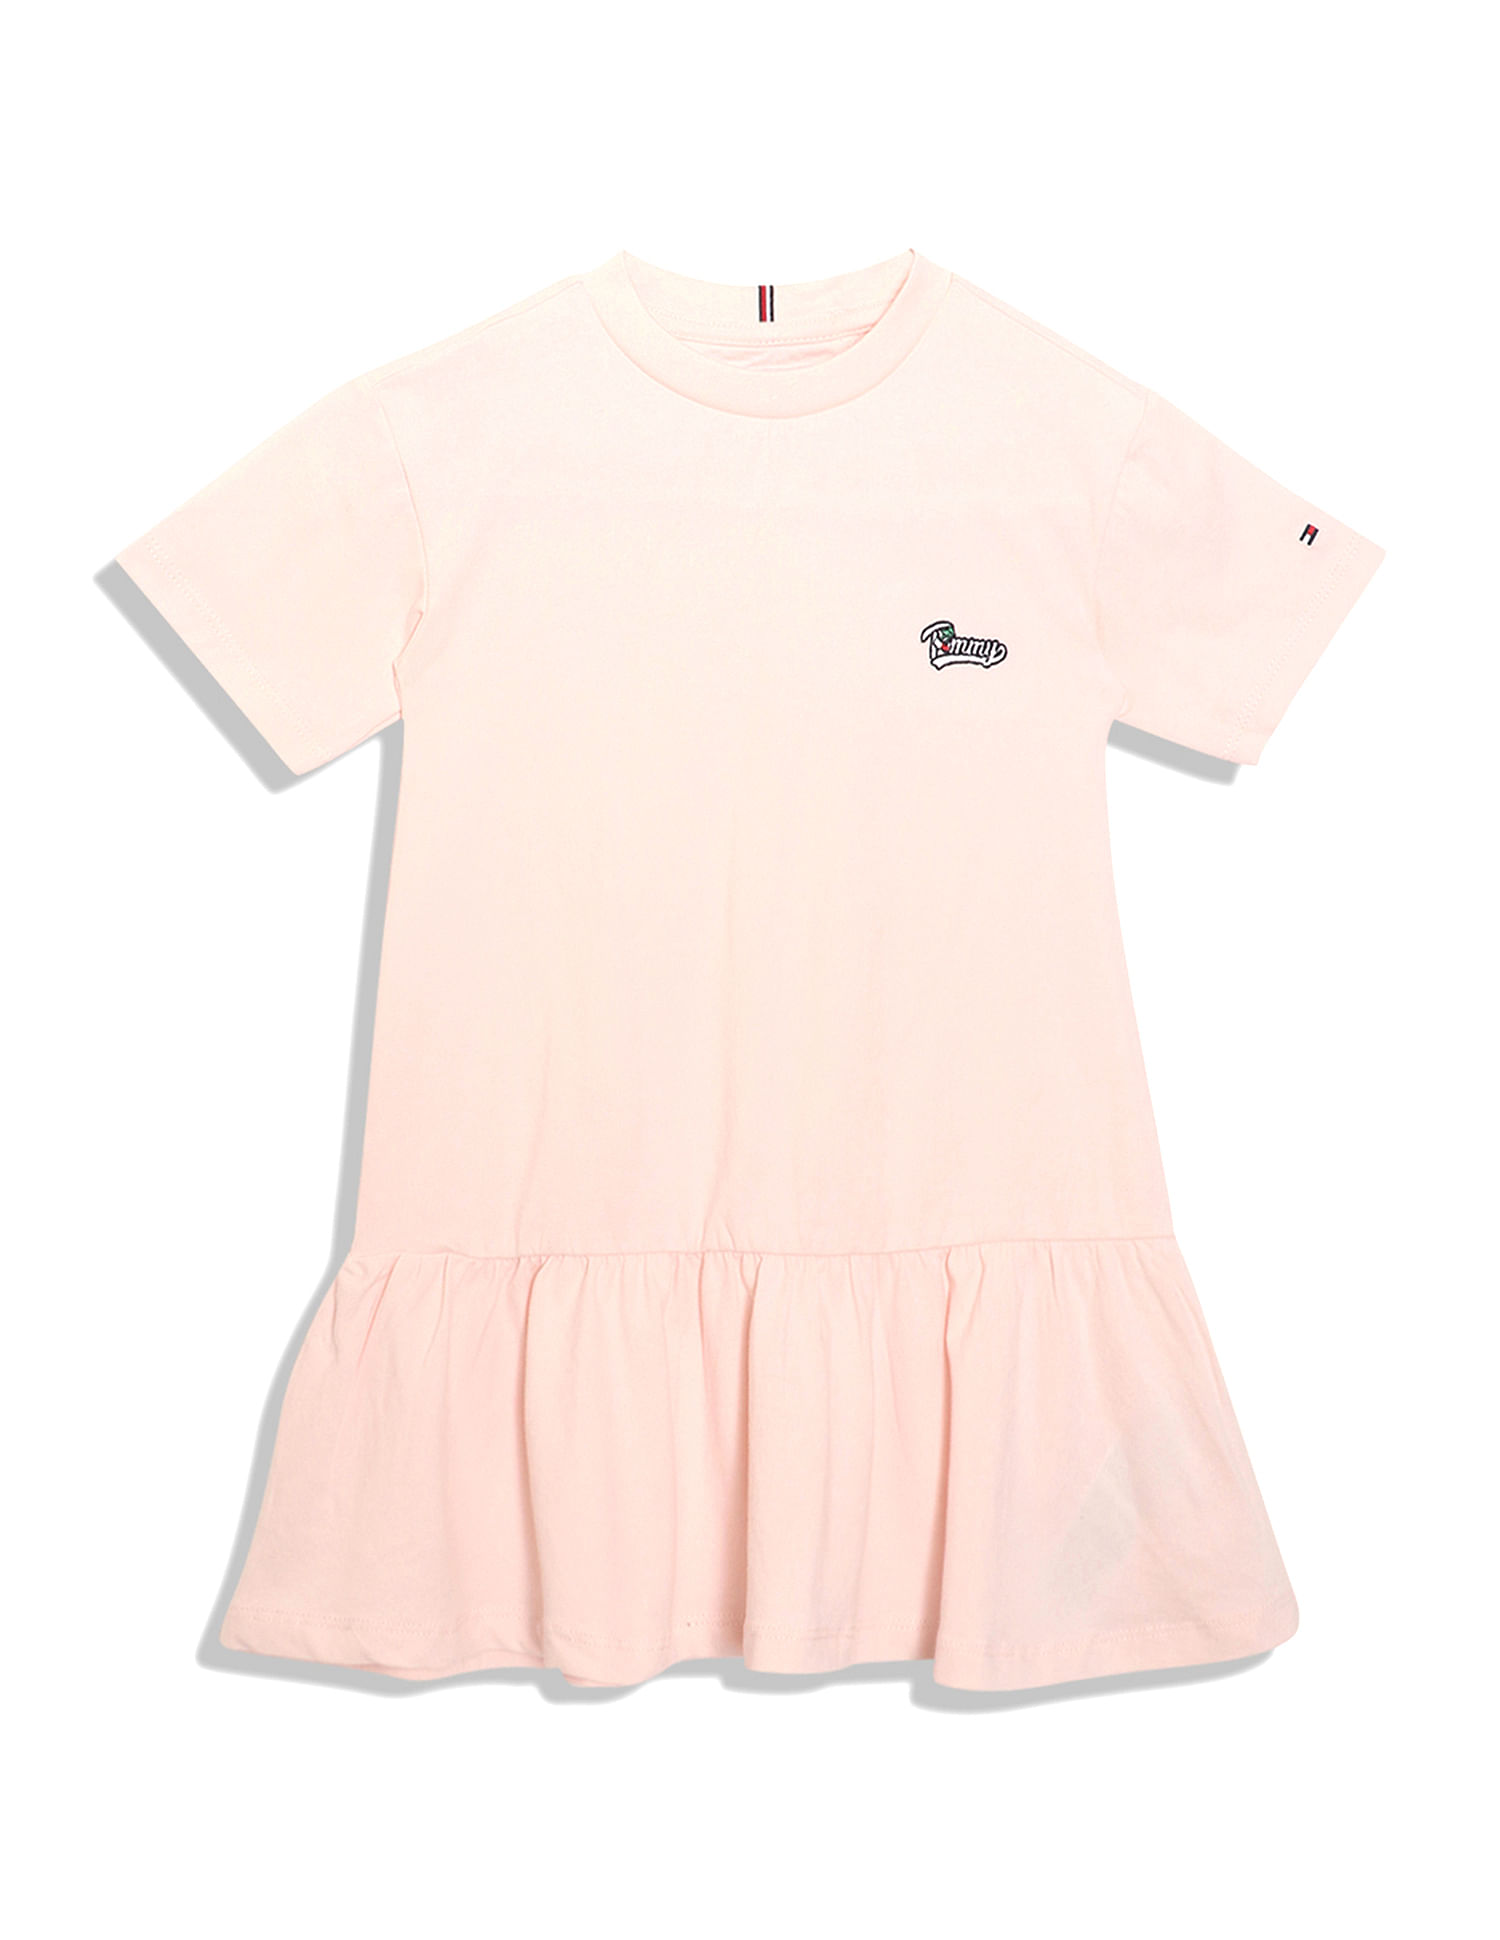 Let's Go Girls T-Shirt Dress | JQ Clothing Co.